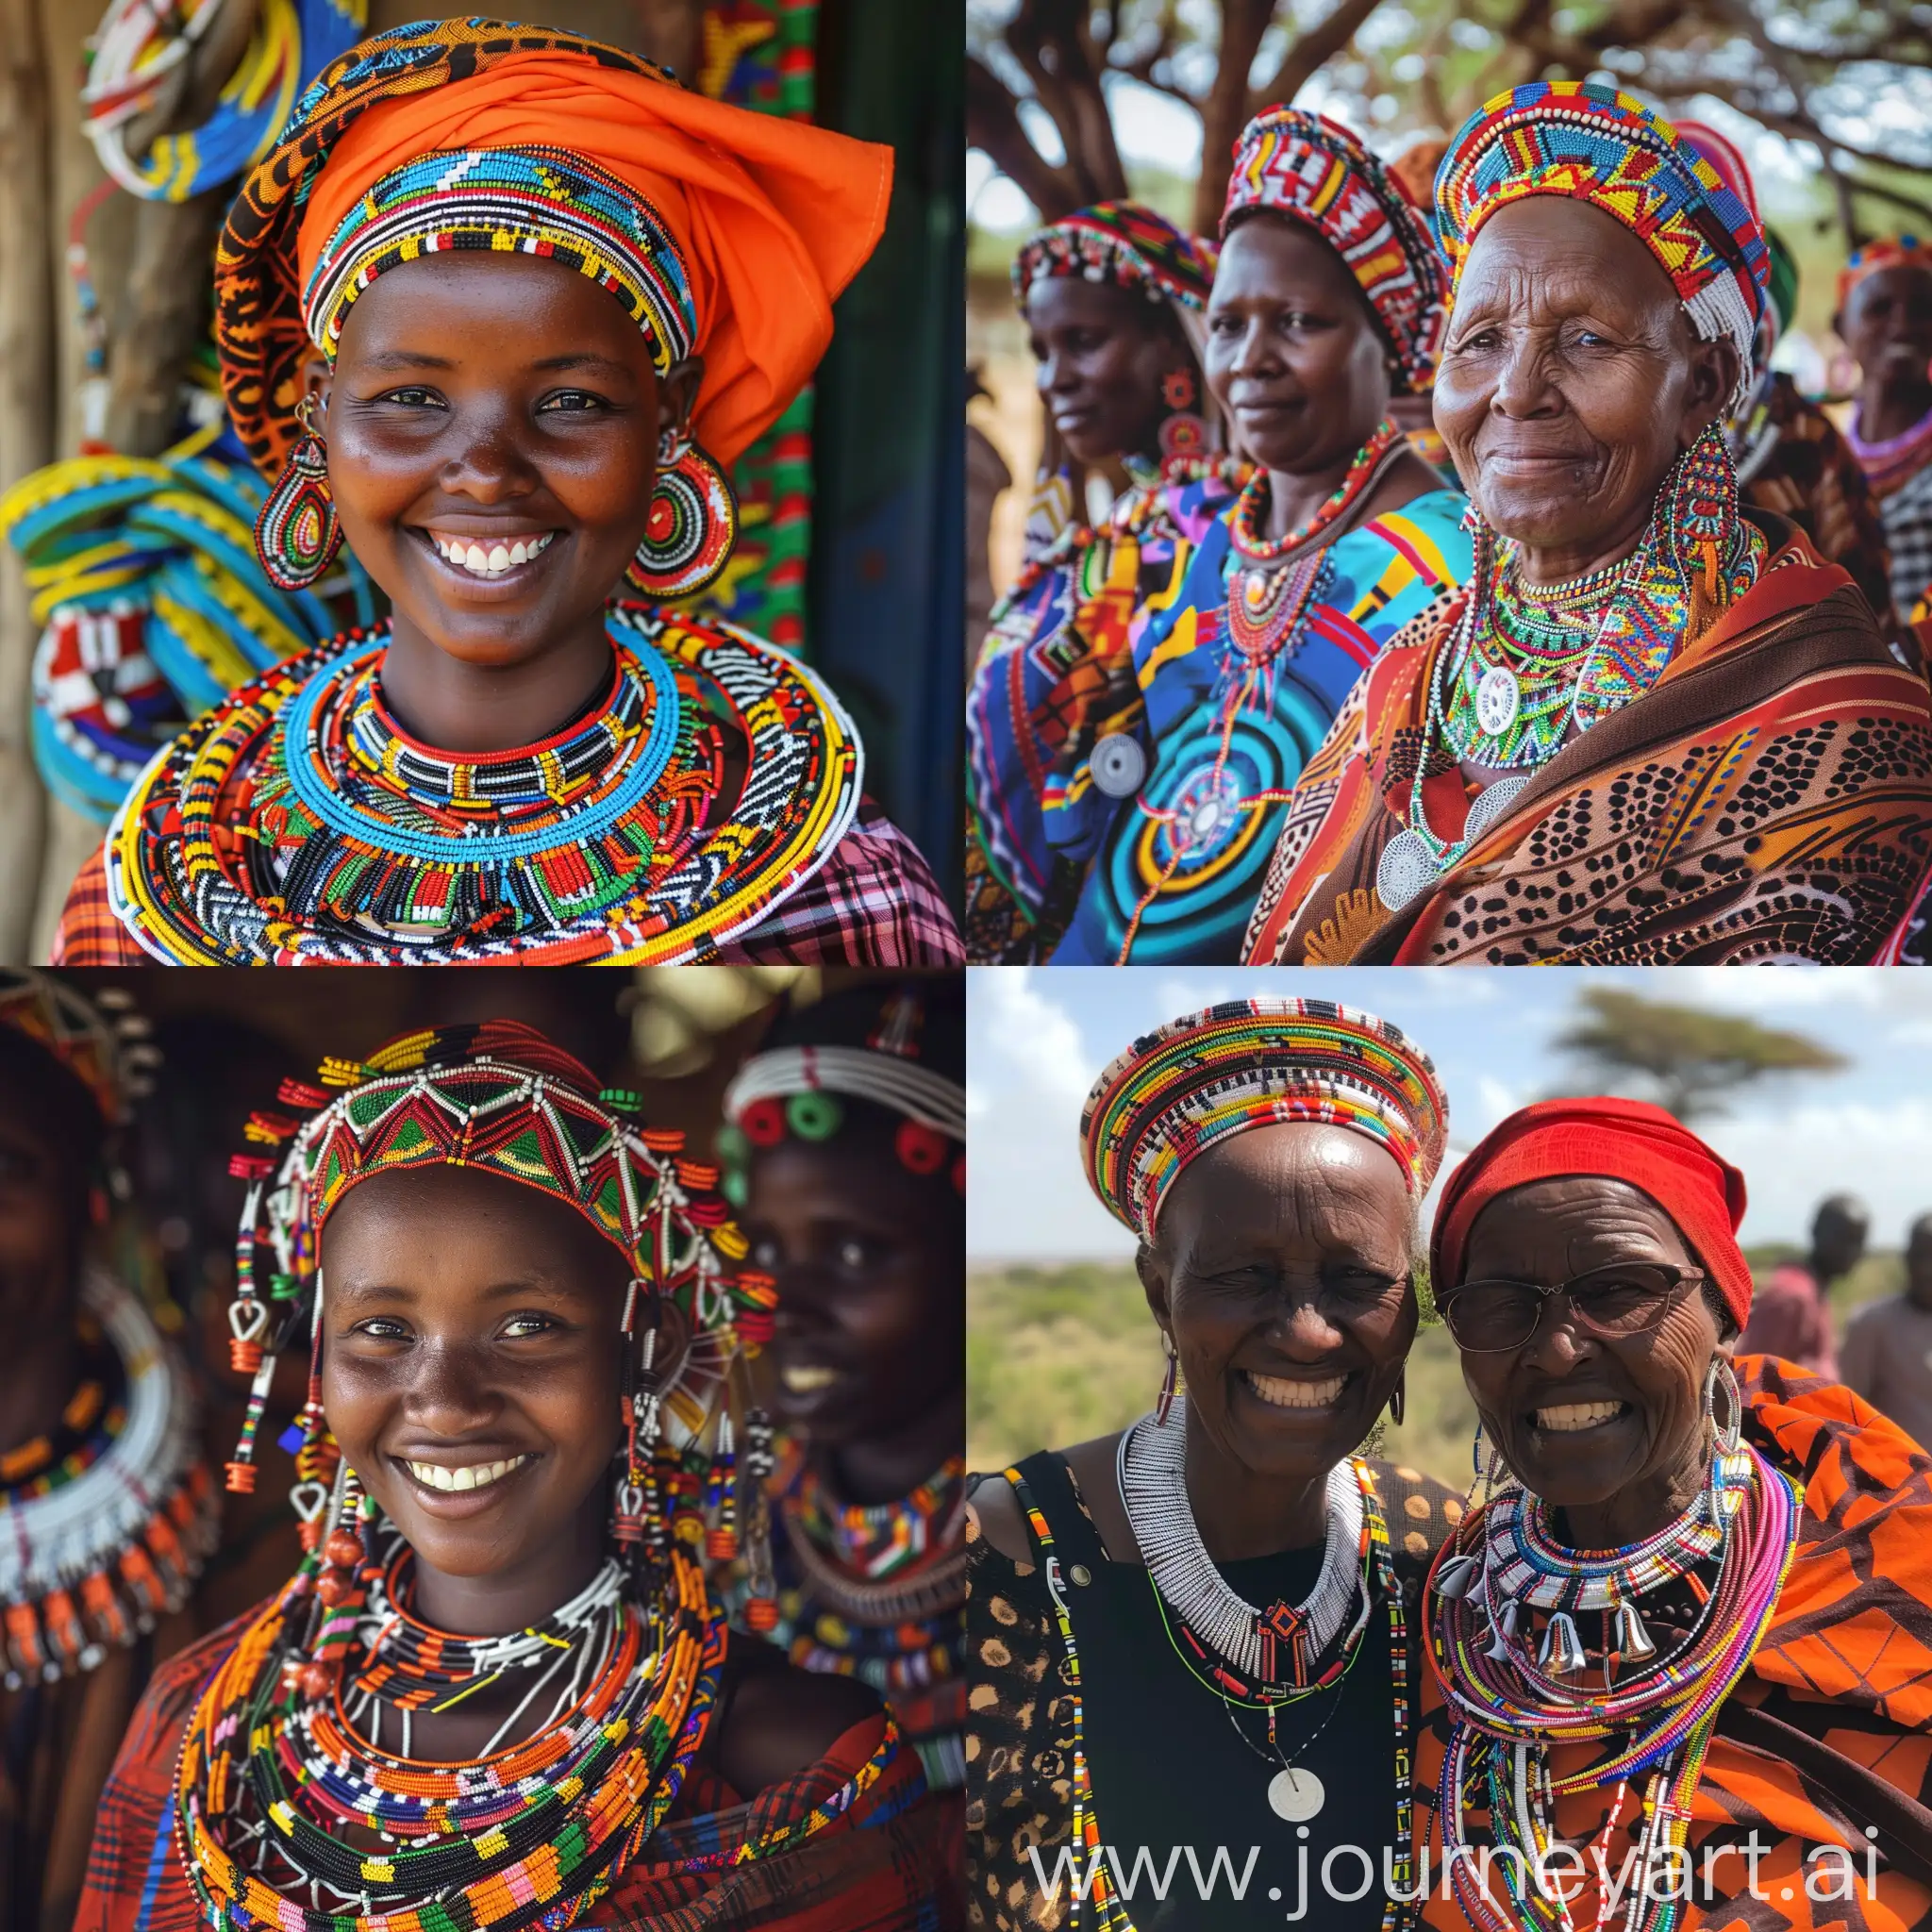 Vibrant-Kenyan-Community-Celebrating-Culture